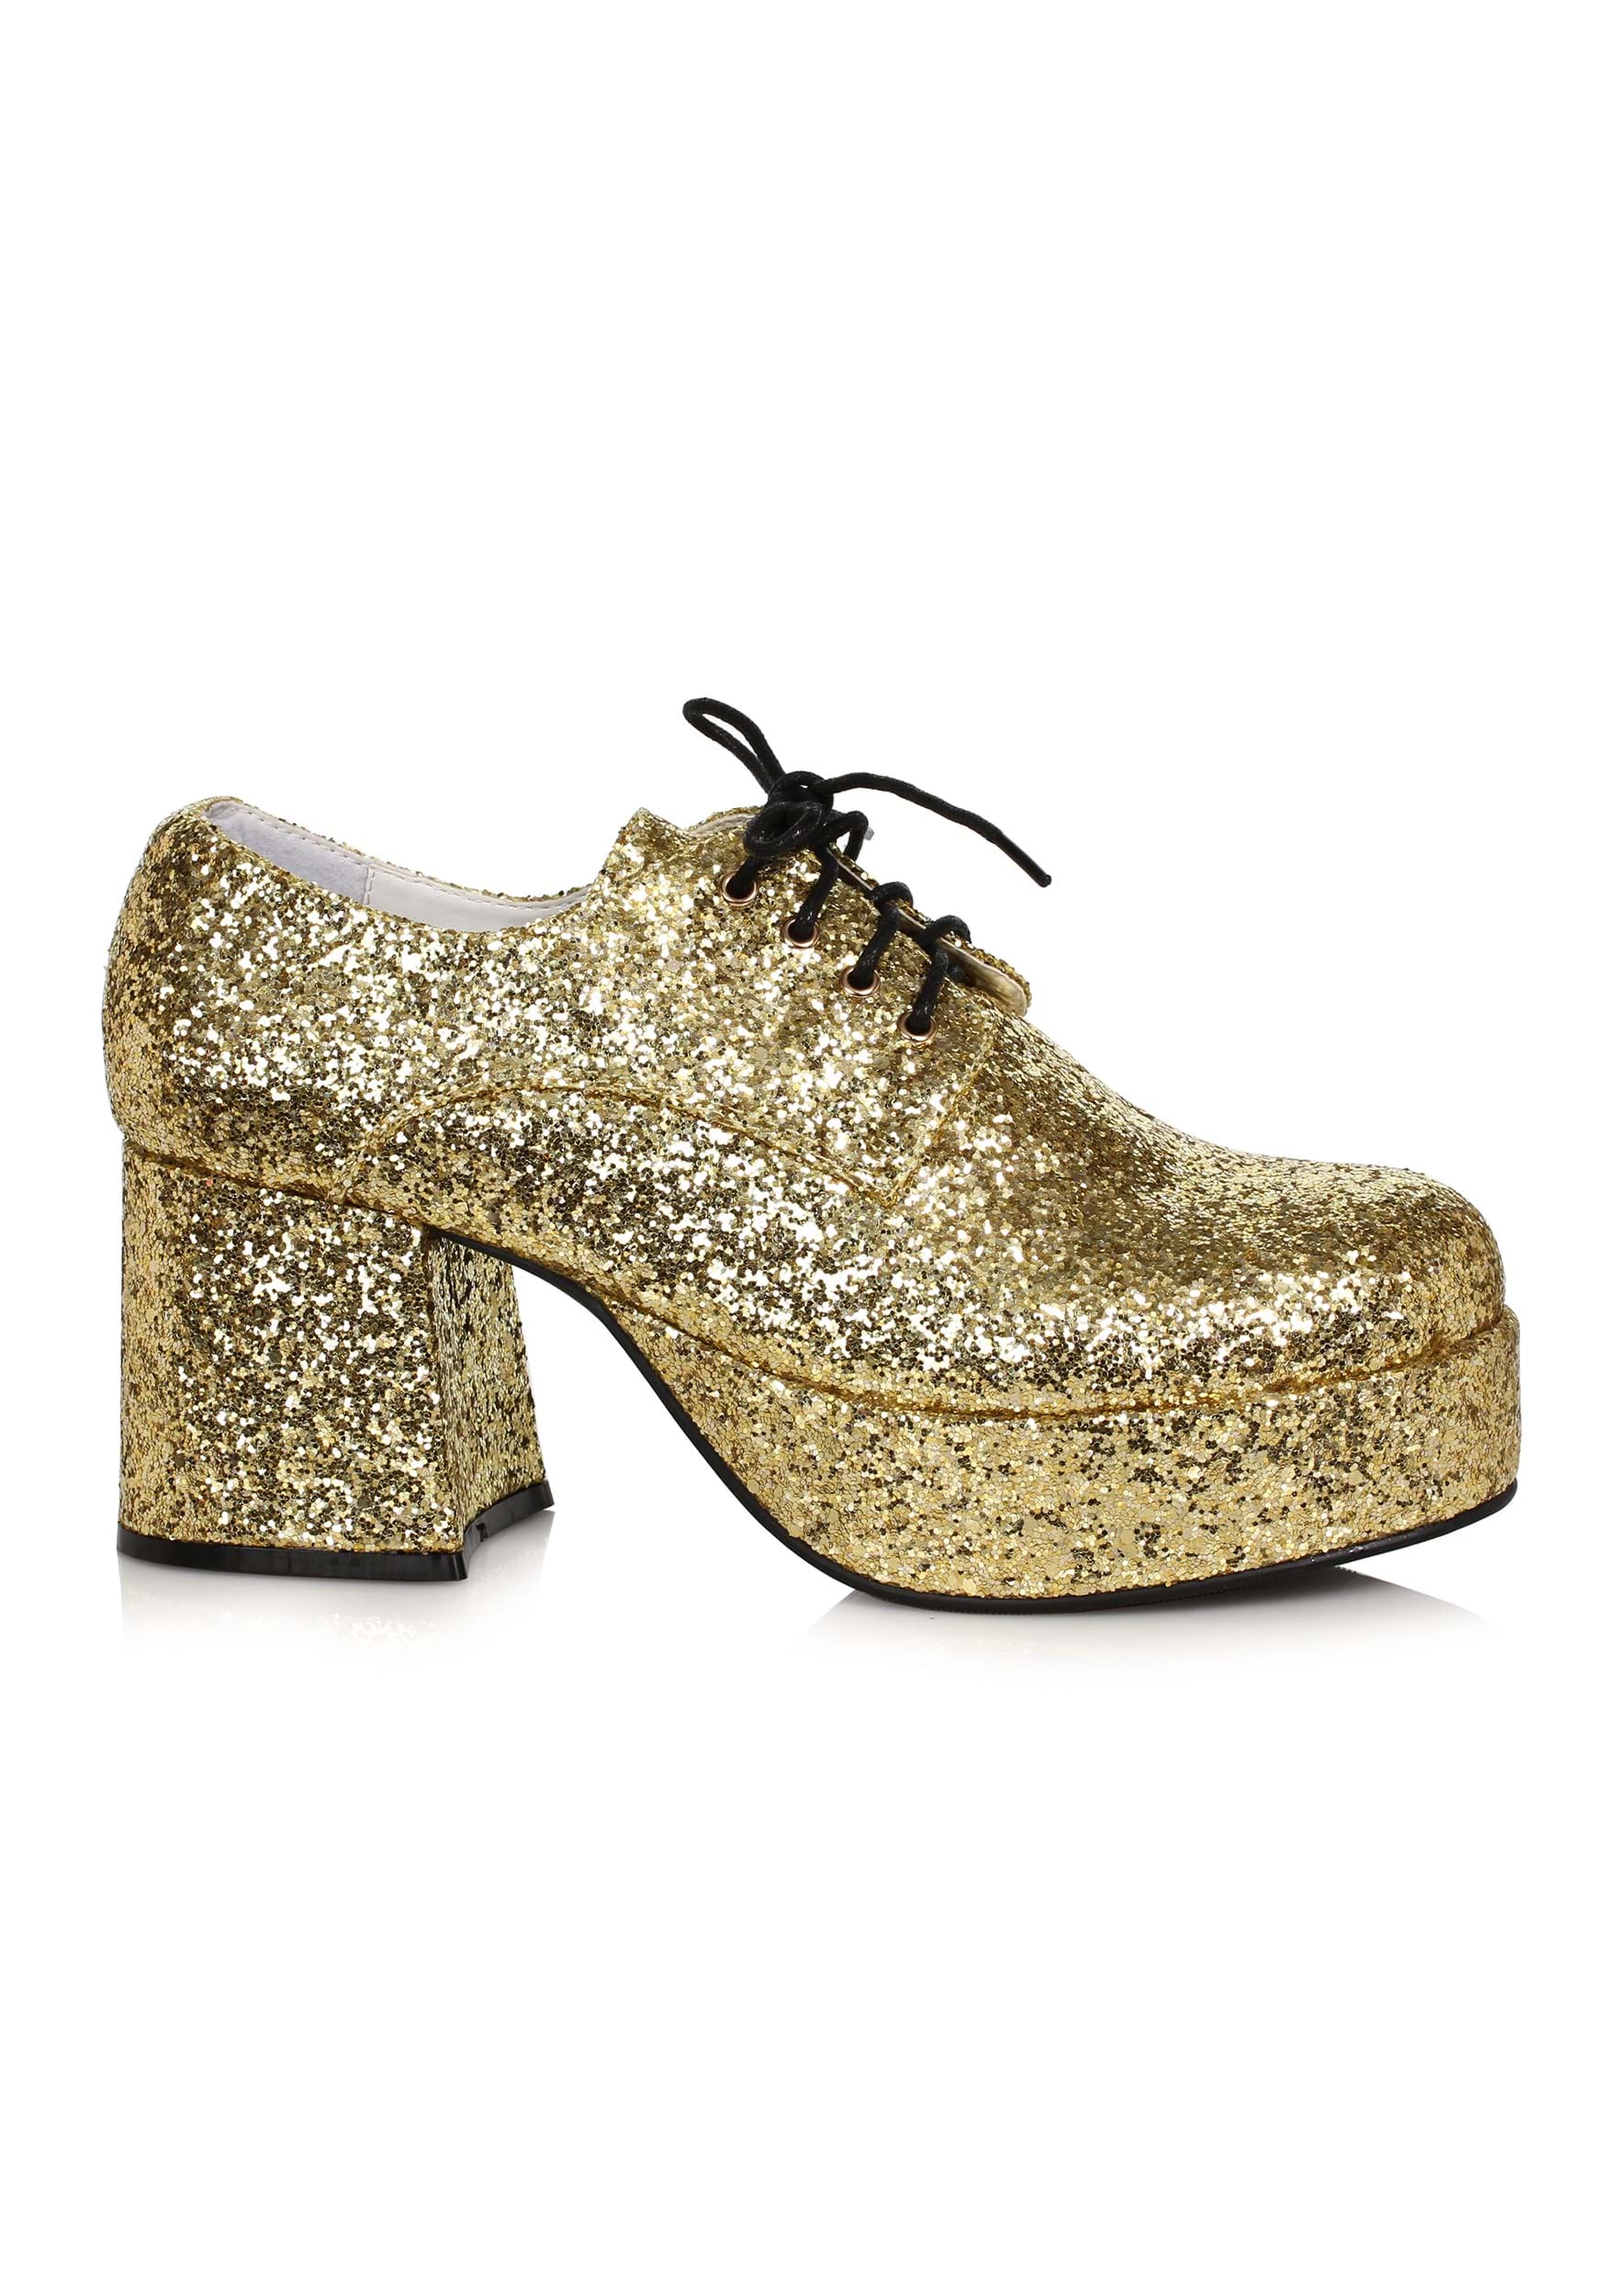 Mens Vintage Shoes, Boots | Retro Shoes & Boots Gold Mens Glitter Platform Shoes $59.99 AT vintagedancer.com